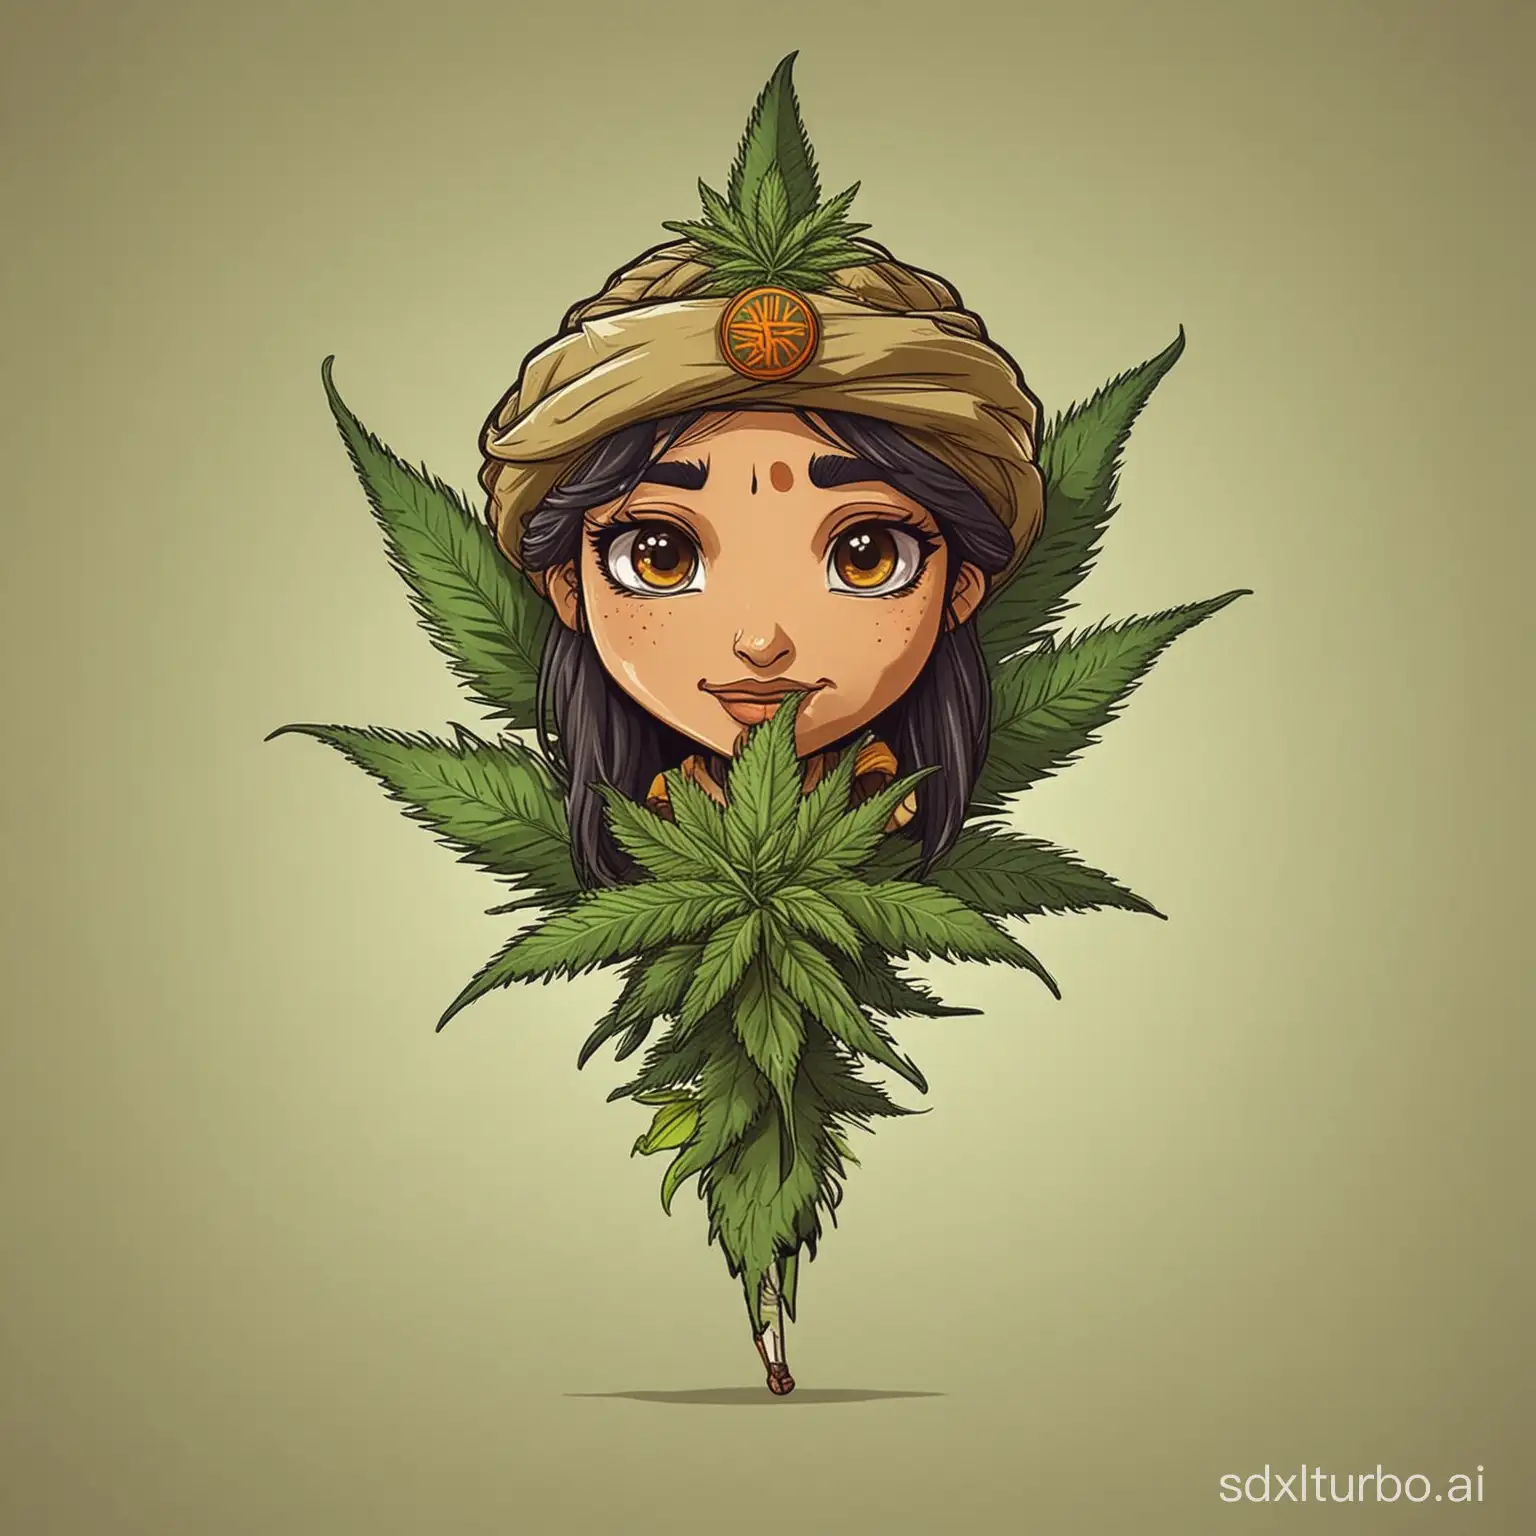 Colorful-Cartoon-Character-in-a-Hindukush-Cannabis-Field